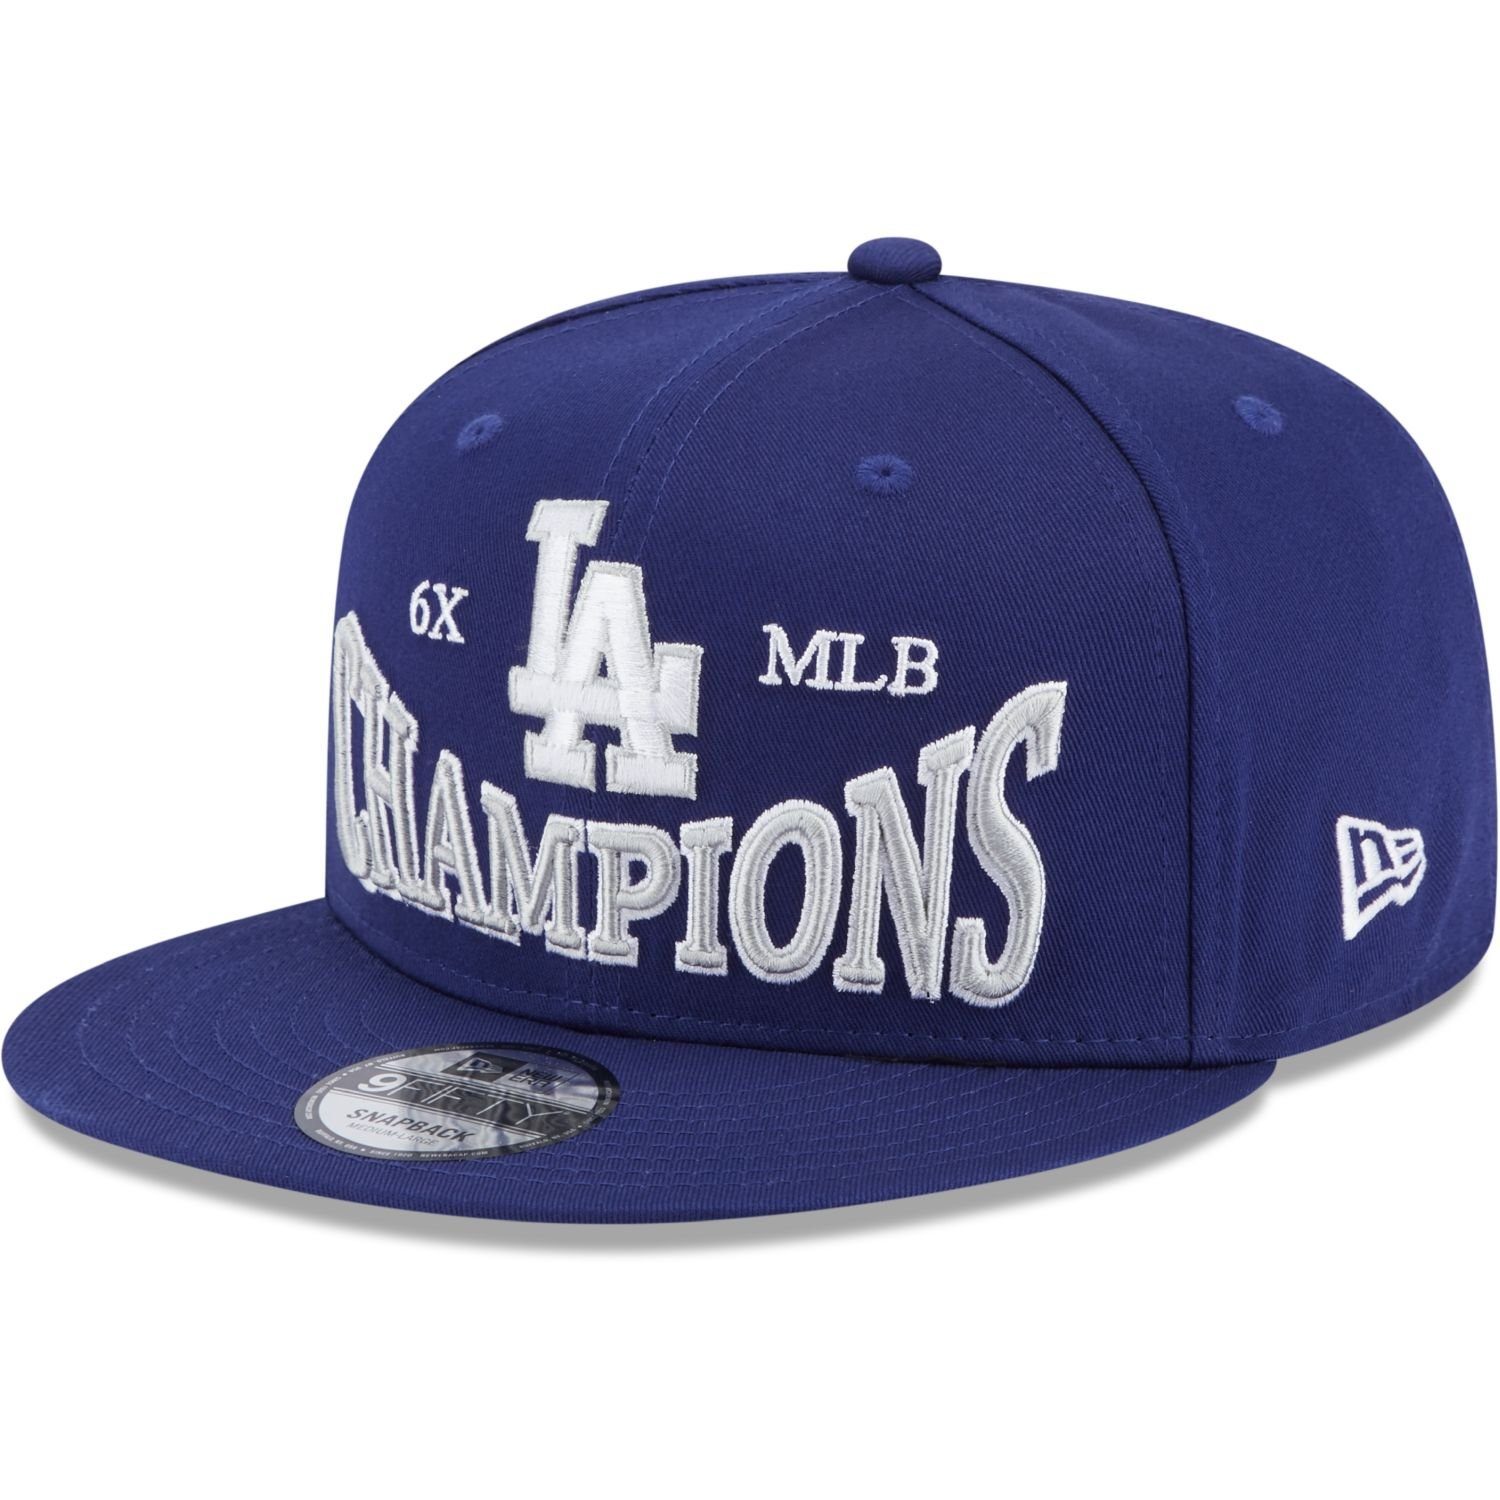 New Era Snapback Cap 9FIFTY Champions Los Angeles Dodgers